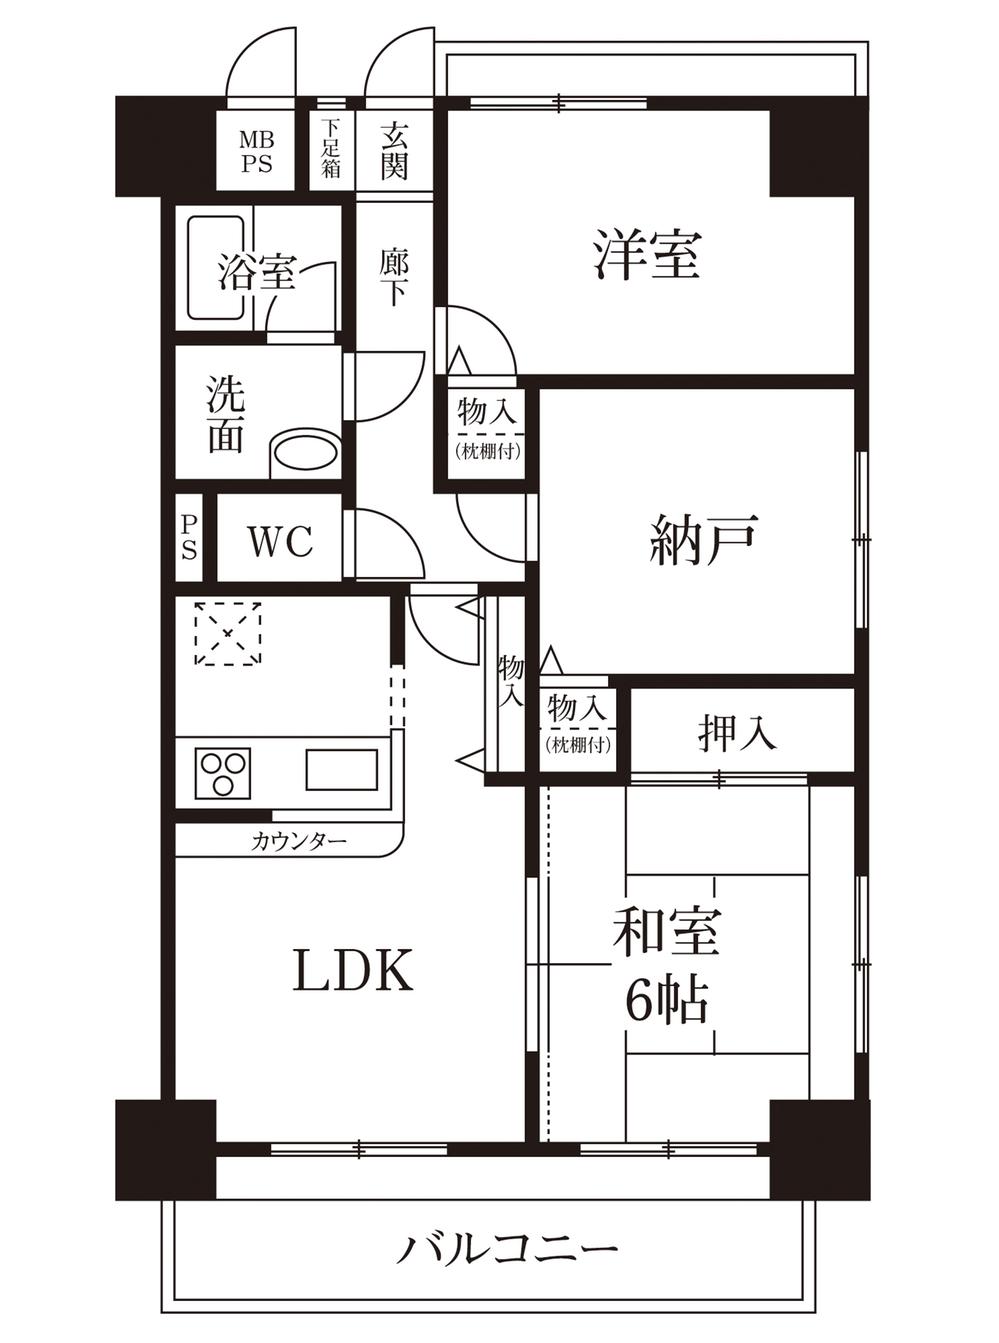 Floor plan. 2LDK + S (storeroom), Price 16.5 million yen, Footprint 67.5 sq m , Balcony area 9.6 sq m